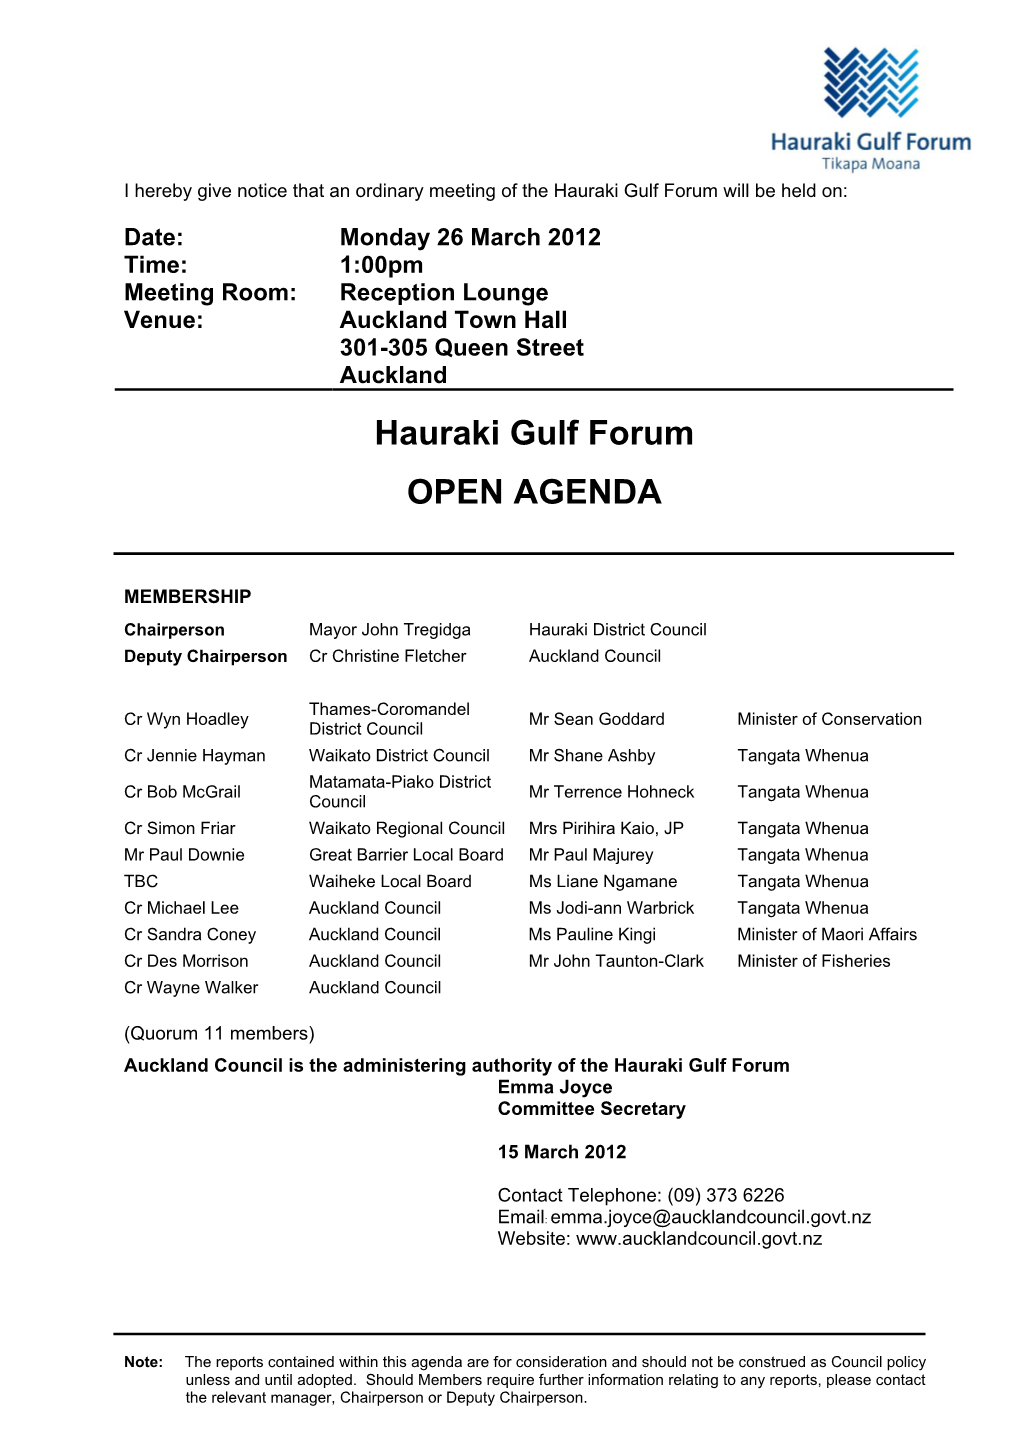 Hauraki Gulf Forum Agenda